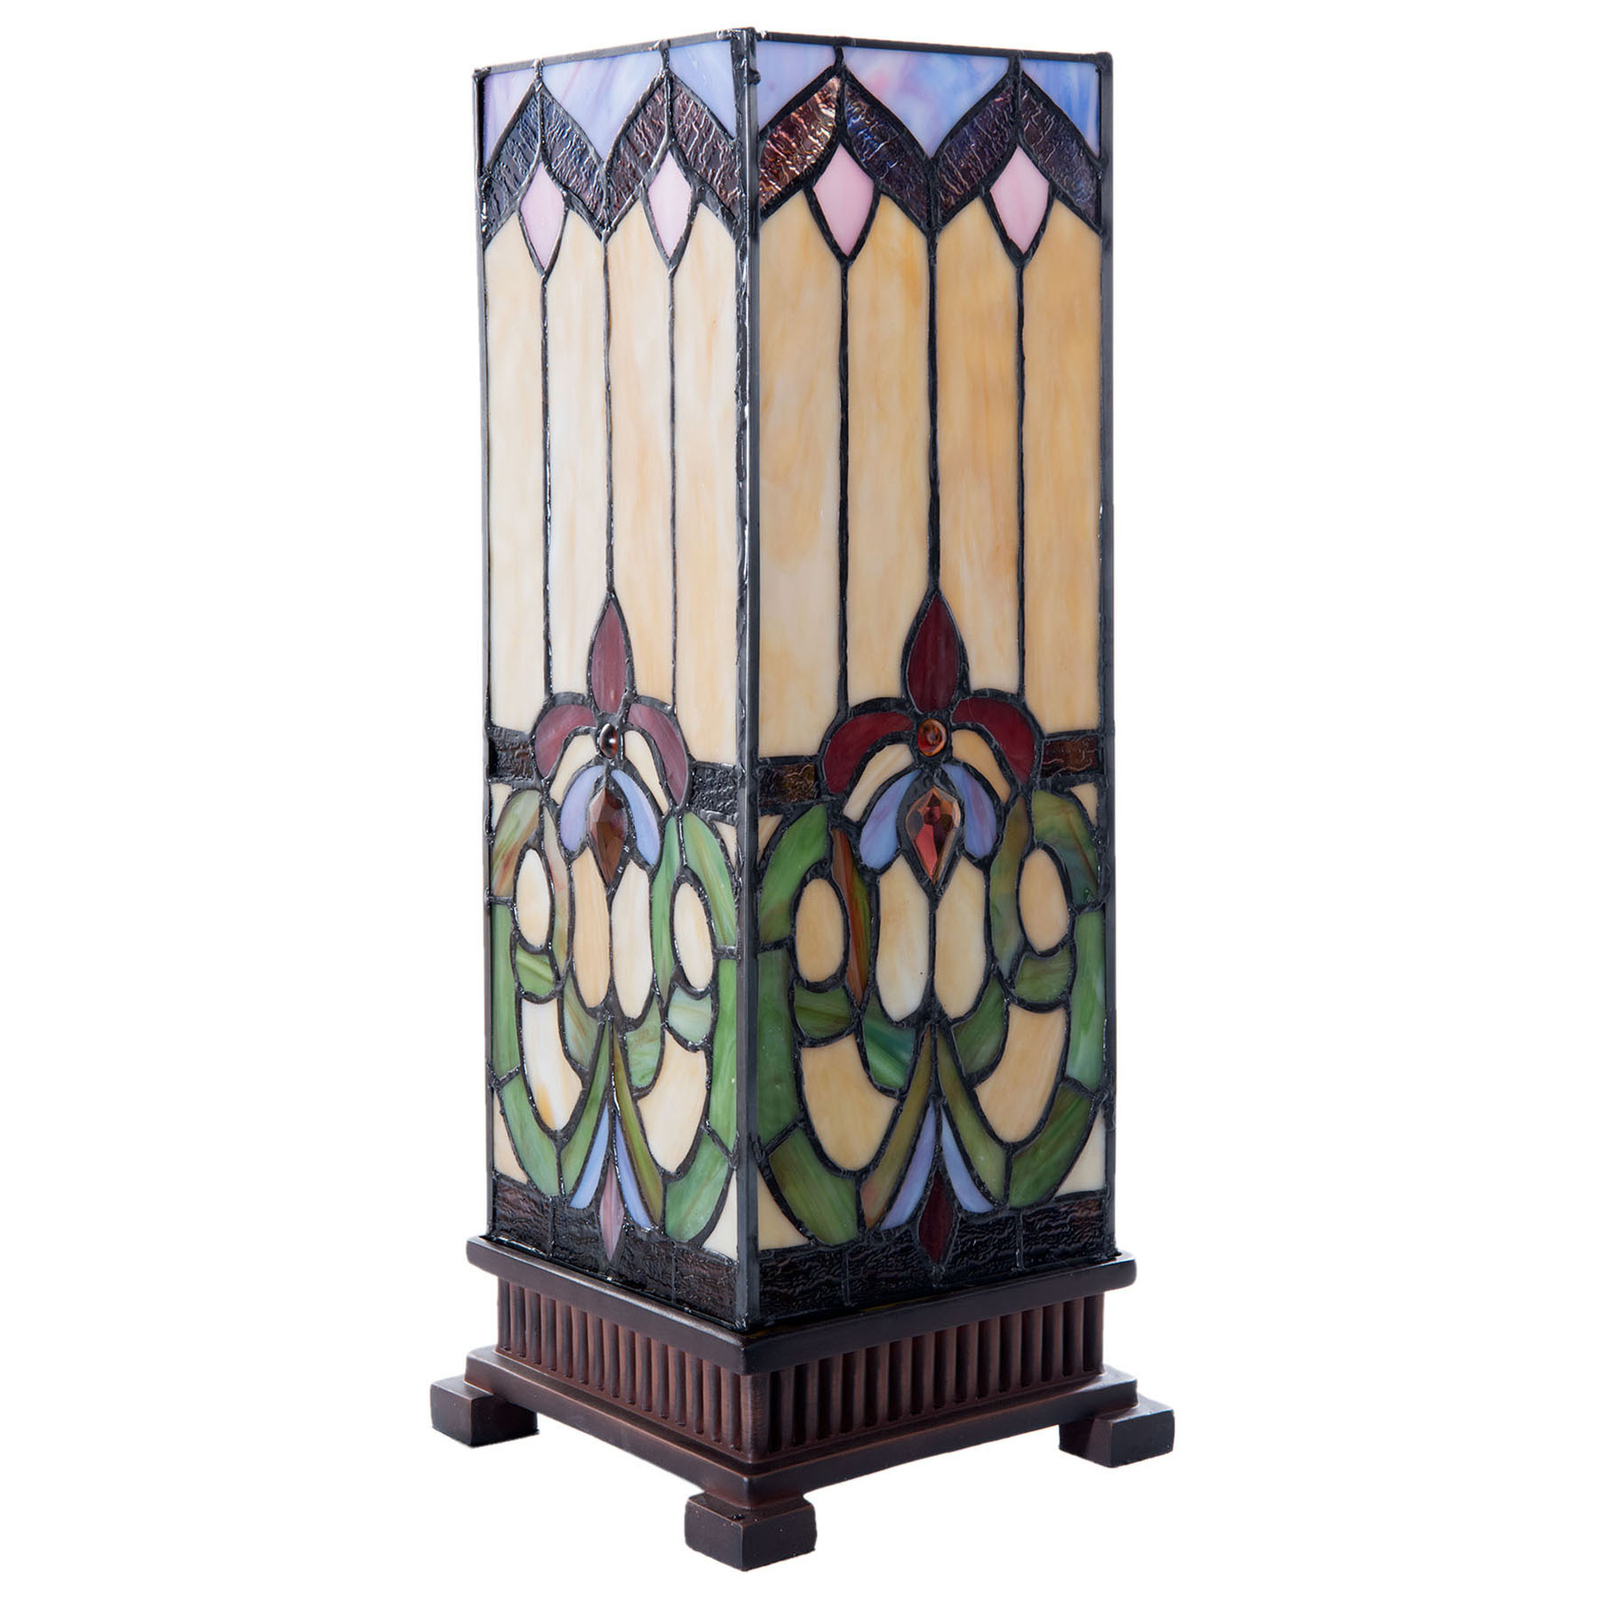 Tafellamp 5907, gekleurd glas in Tiffany-stijl